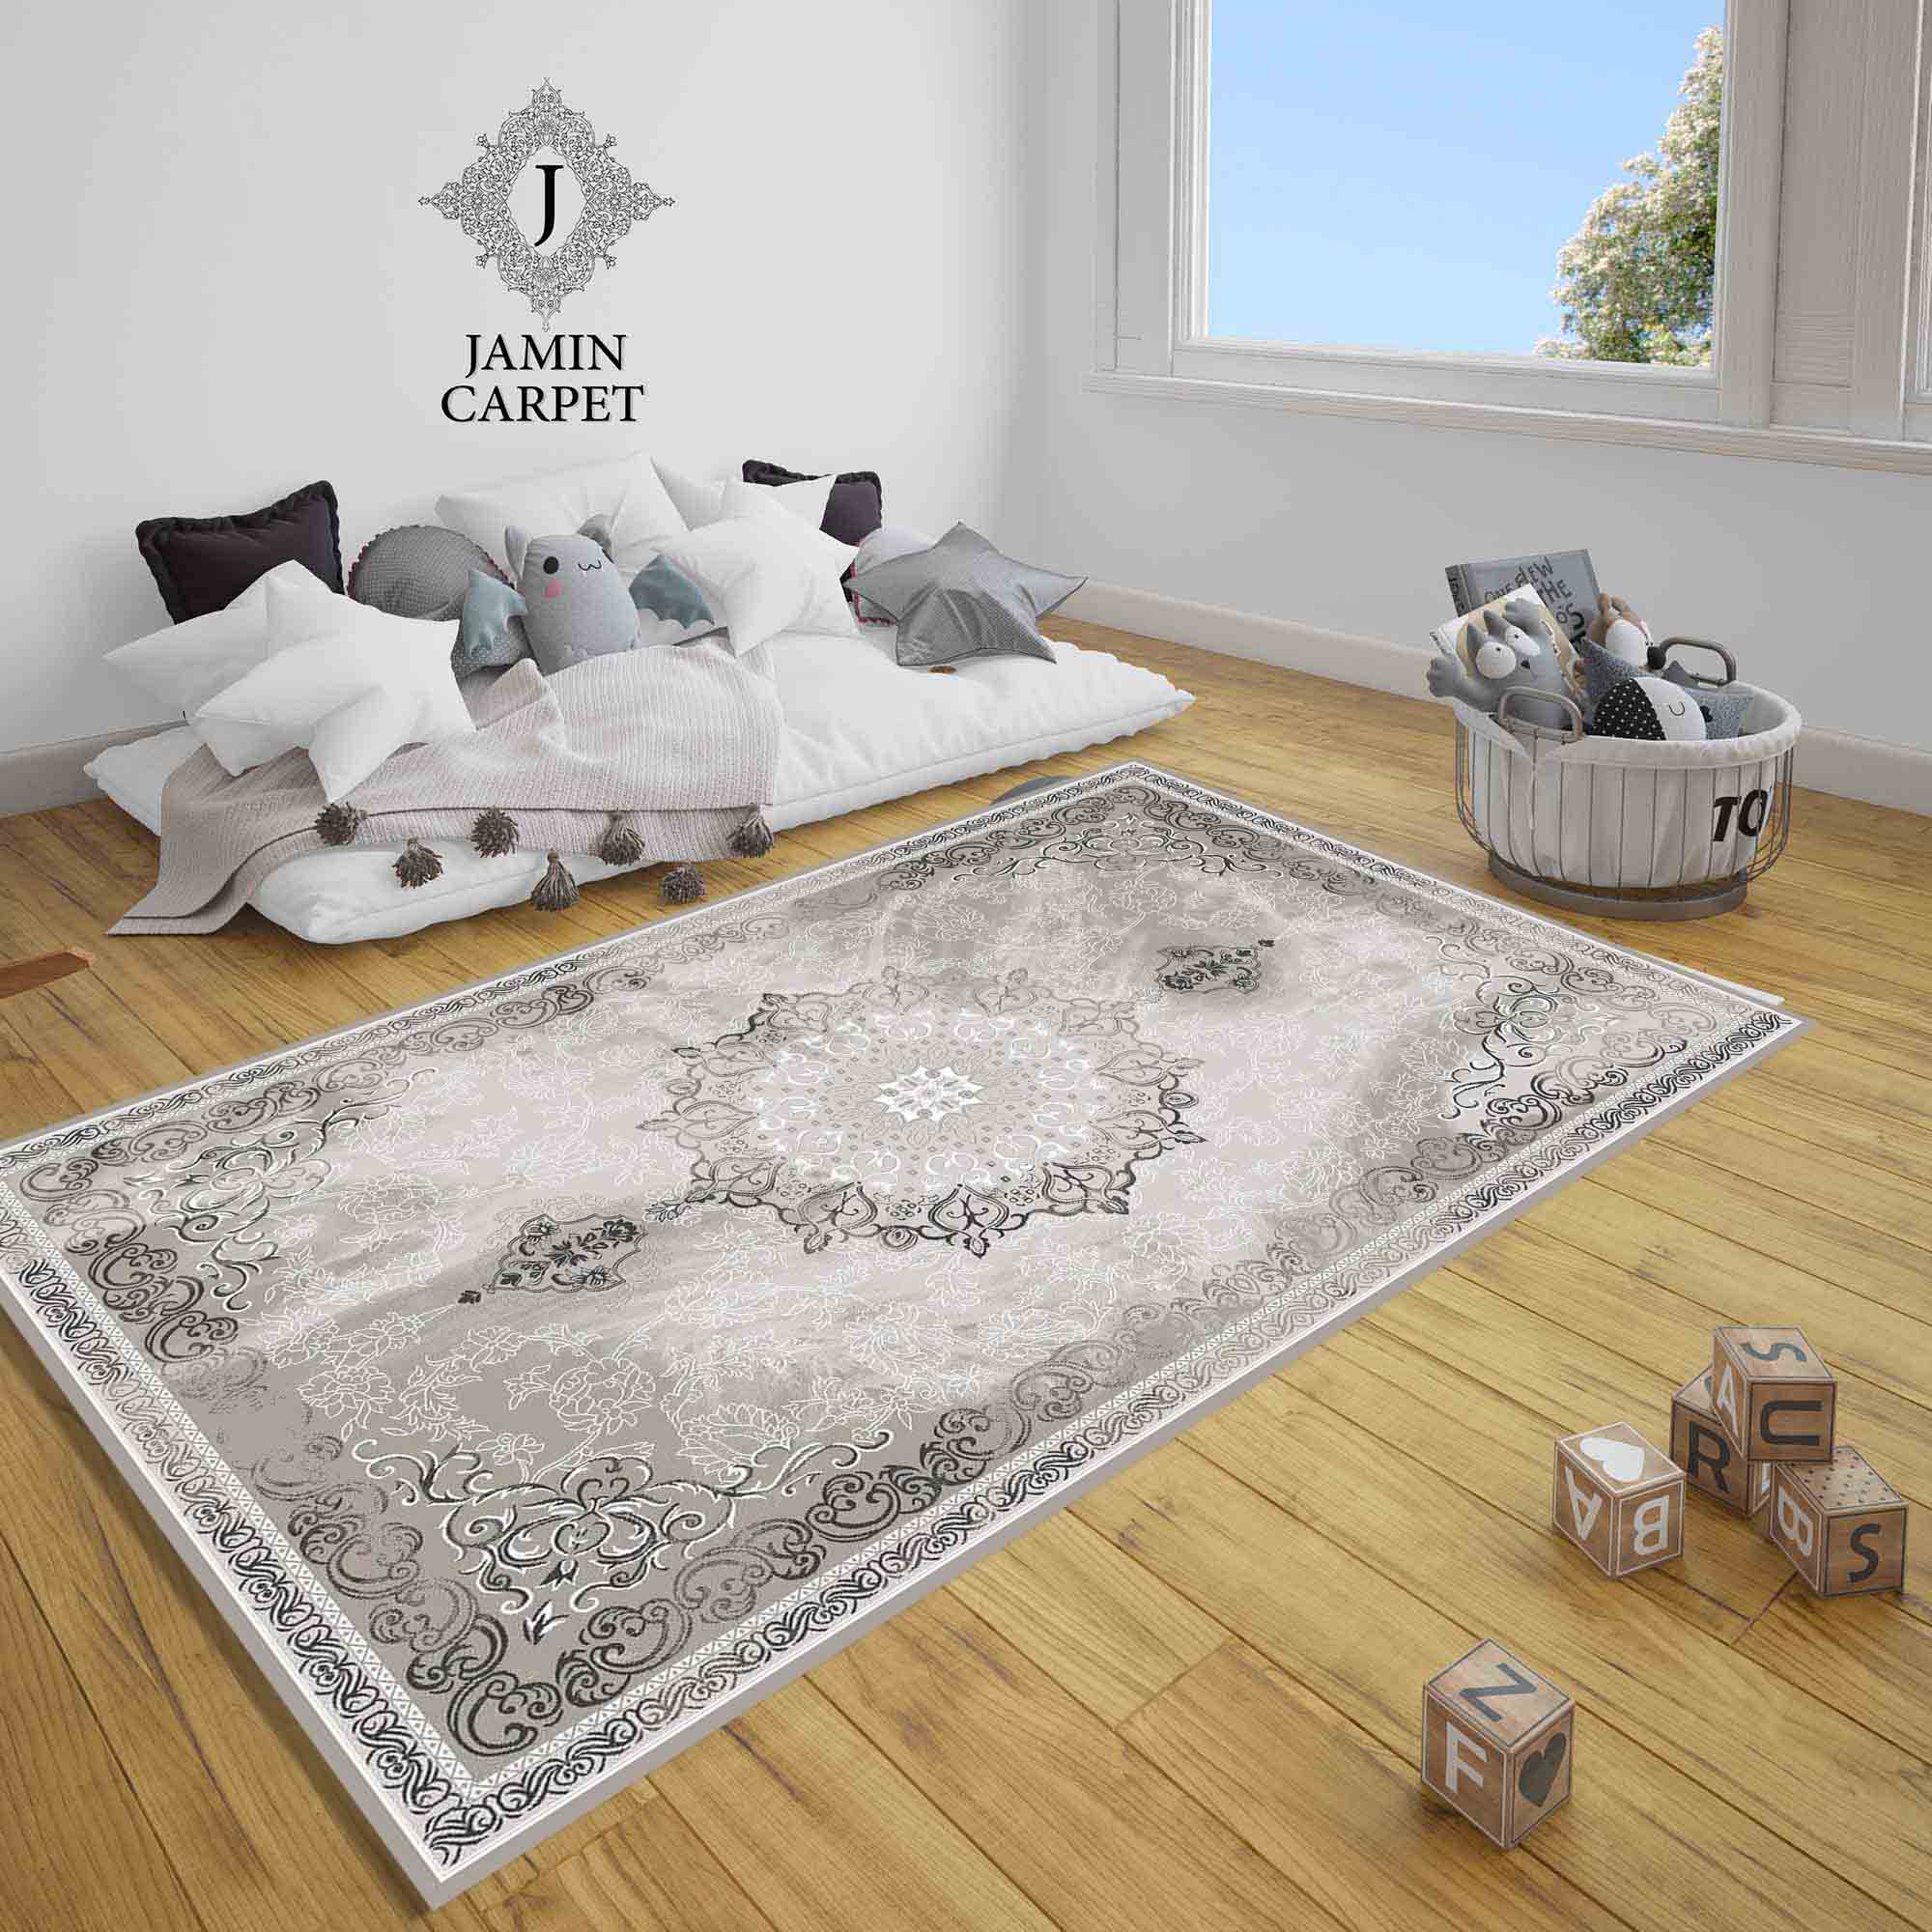 Fantasy carpet code 257 comb 400 density 1800 all acrylic